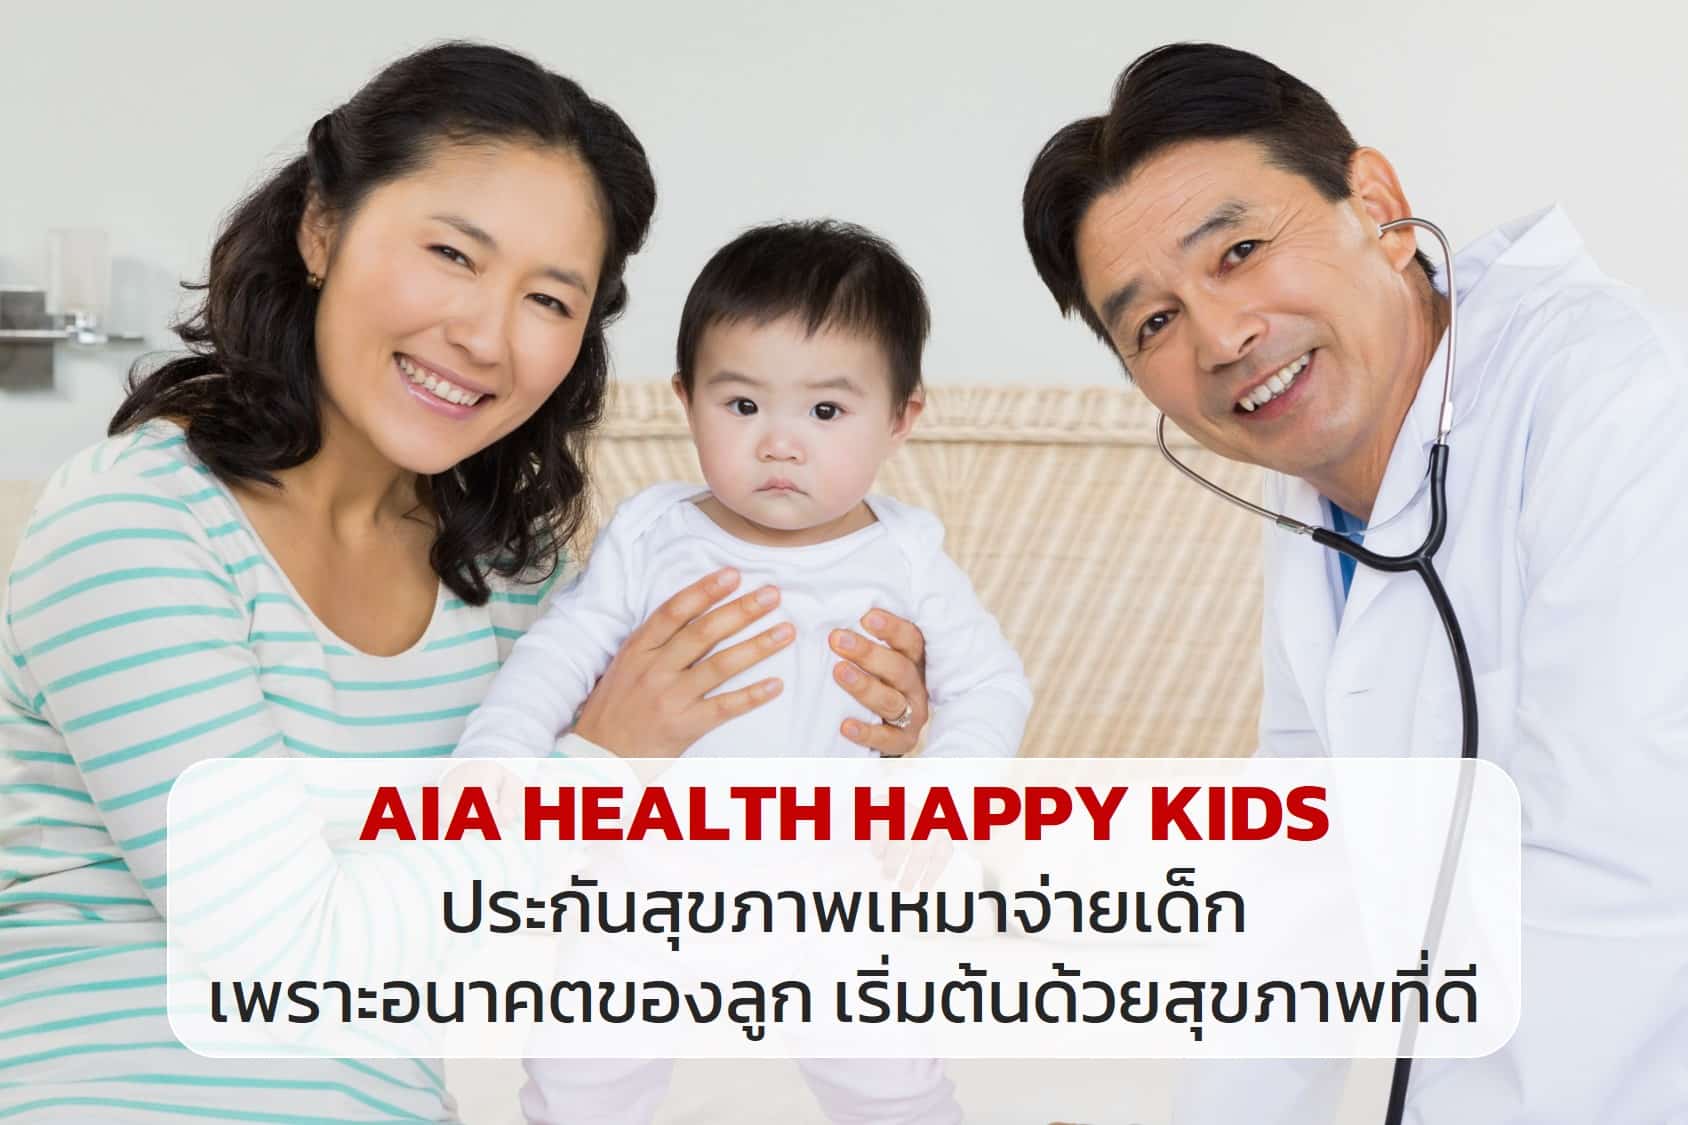 AIA HEALTH HAPPY KIDS ประกันสุขภาพแบบเหมาจ่ายเด็ก